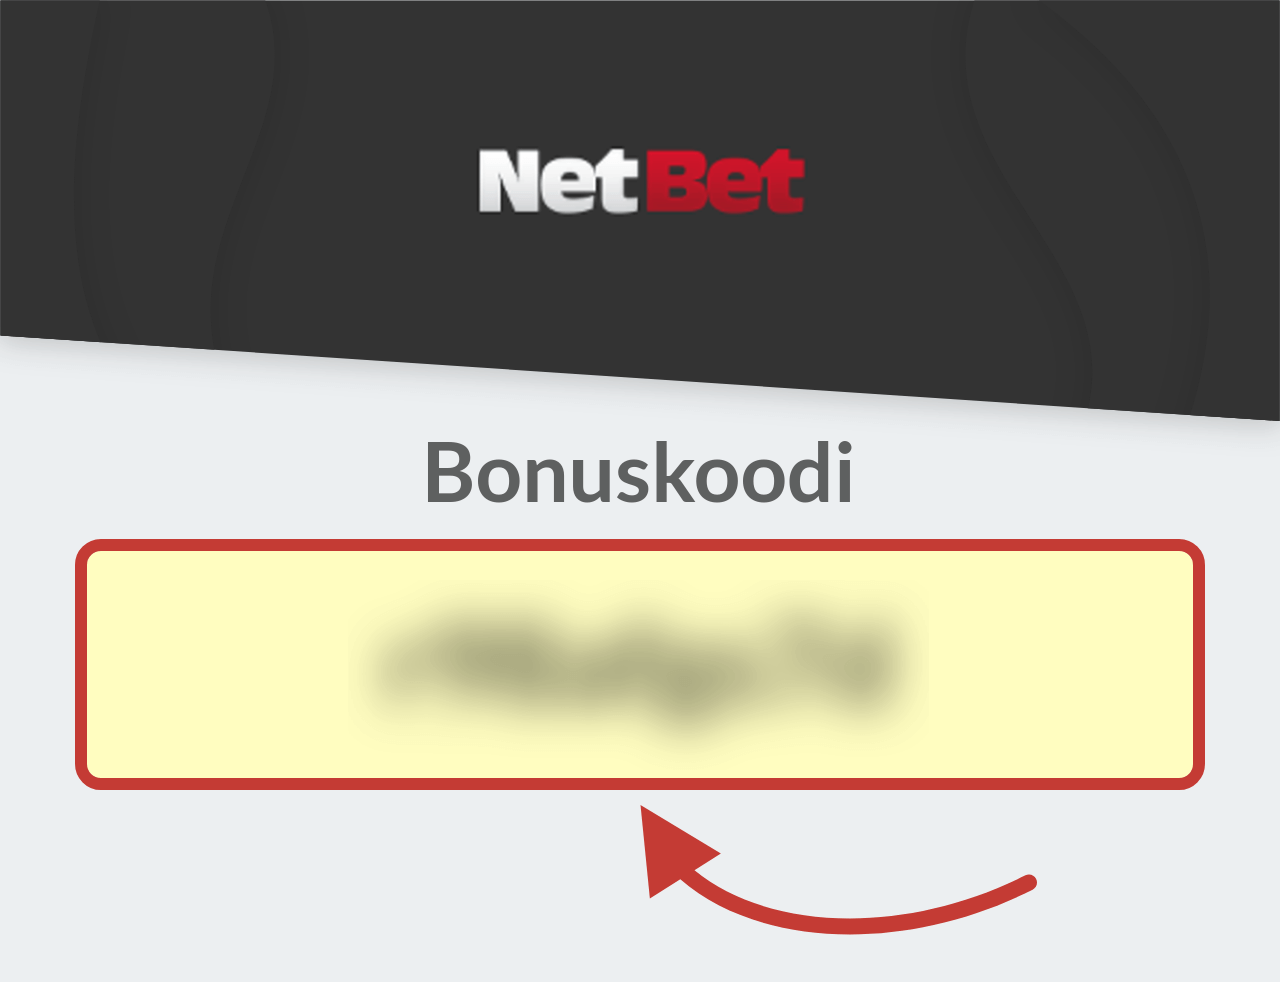 NetBet bonuskoodi 